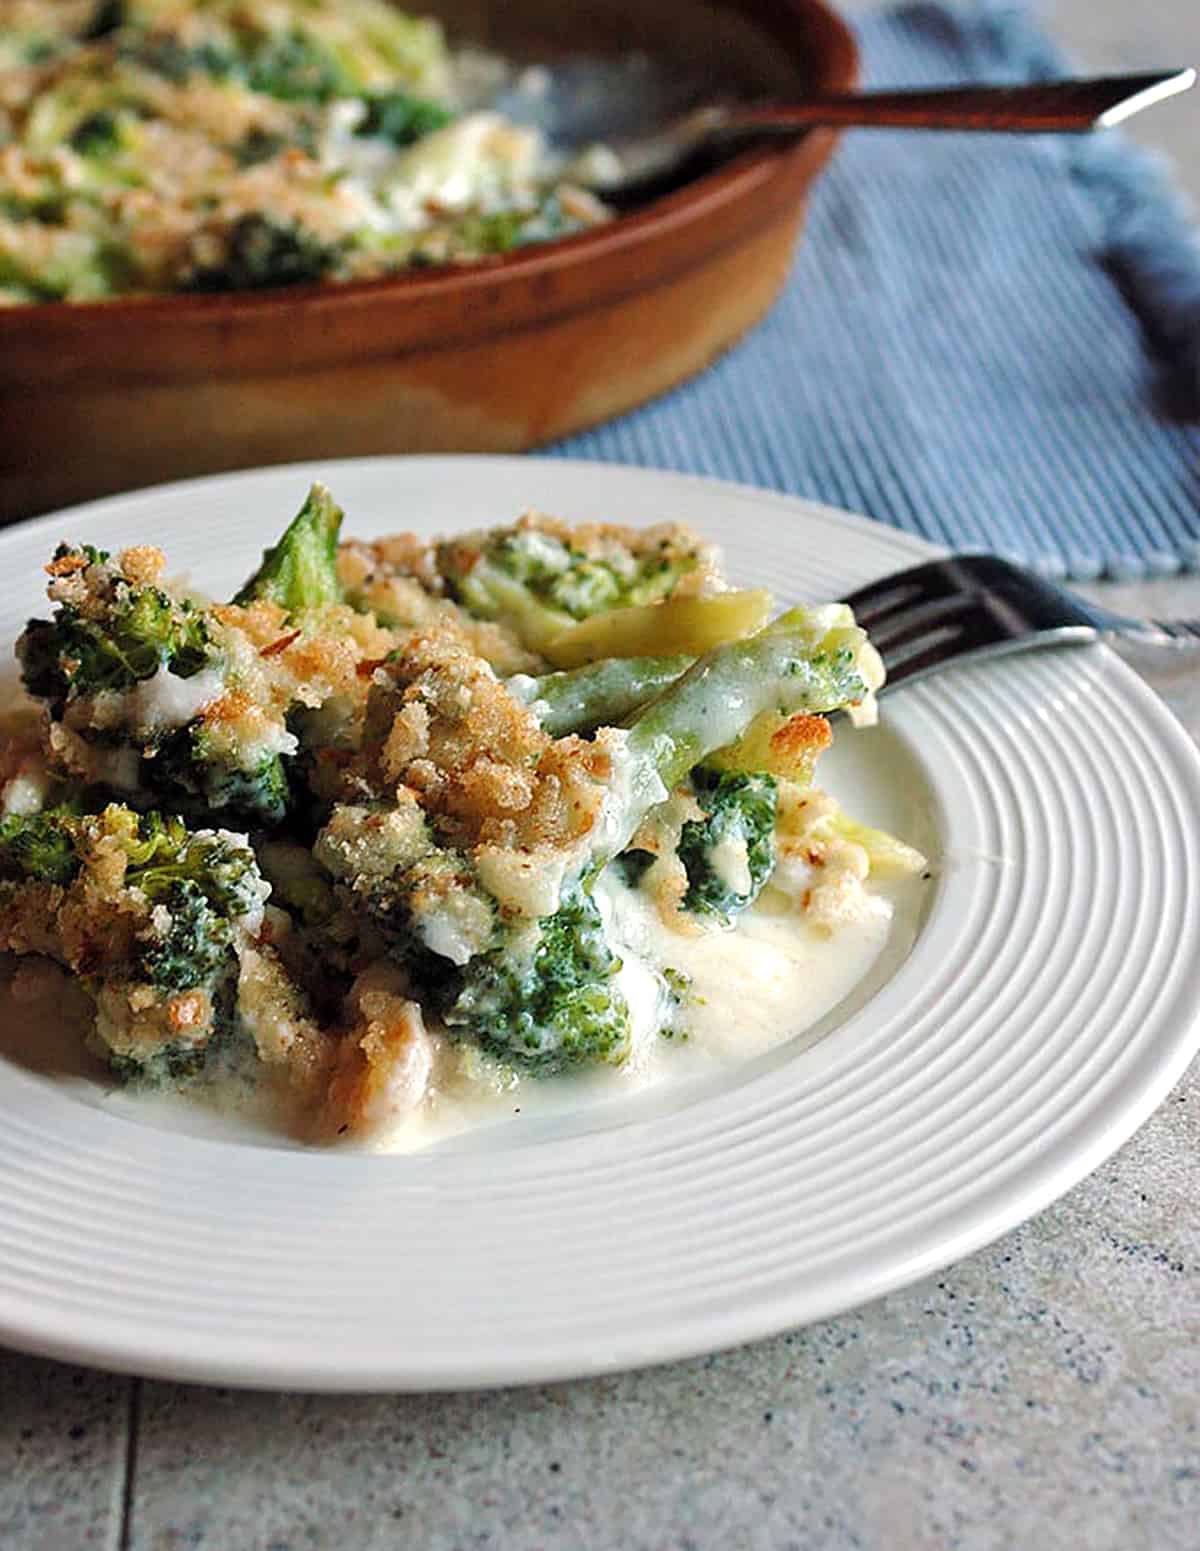 Broccoli au Gratin on a plate with fork